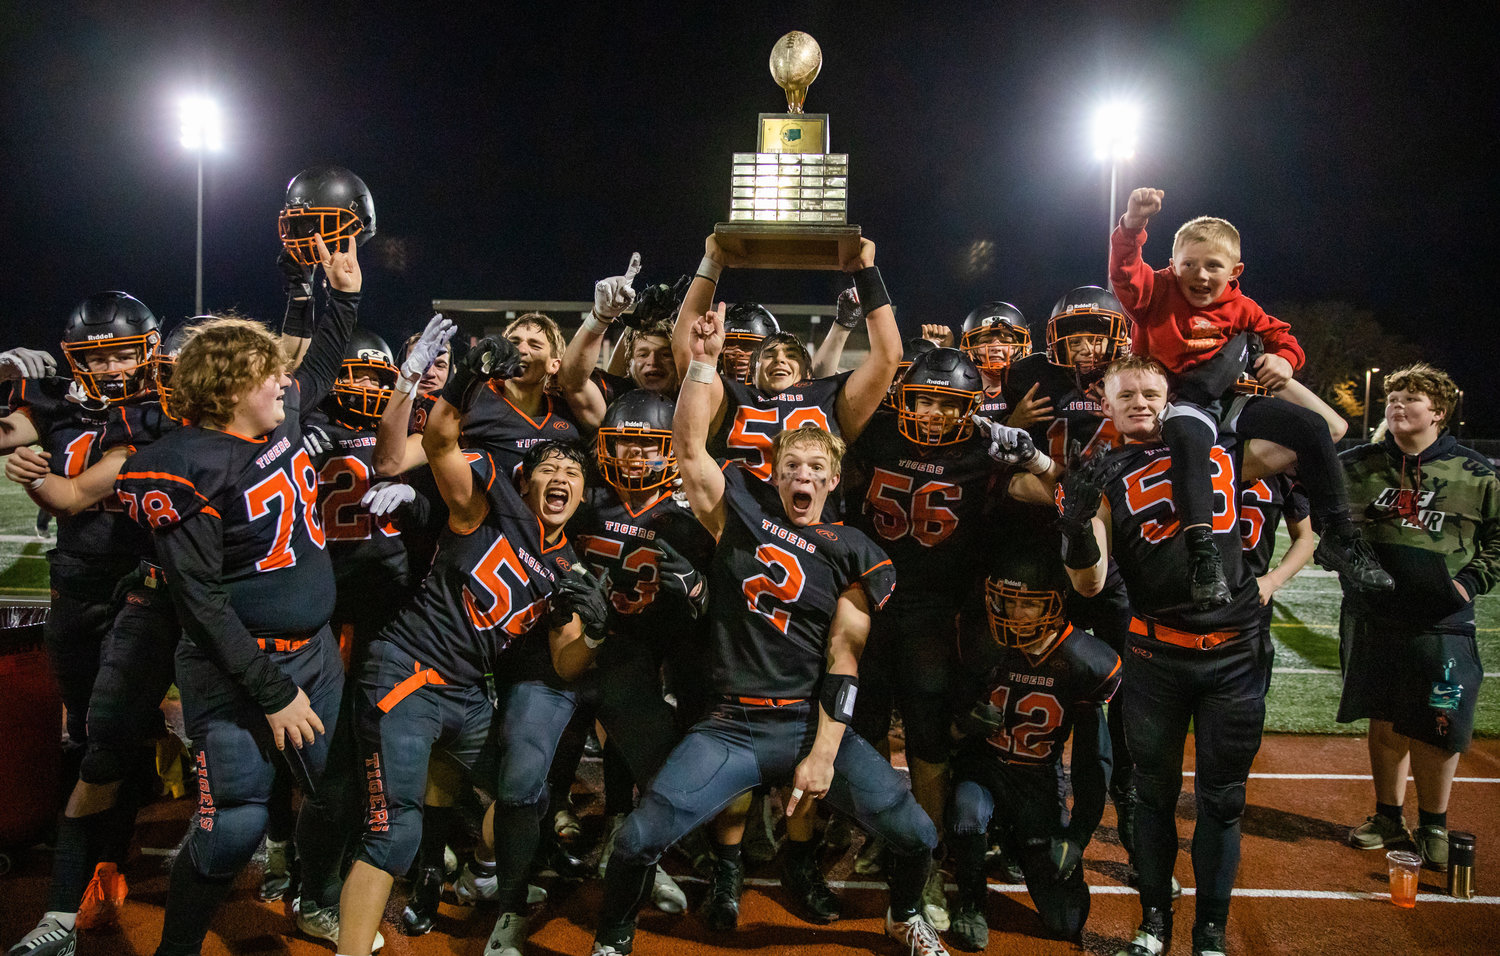 The Napavine High School football team celebrates winning the 2B State Championship Saturday night in Lakewood.